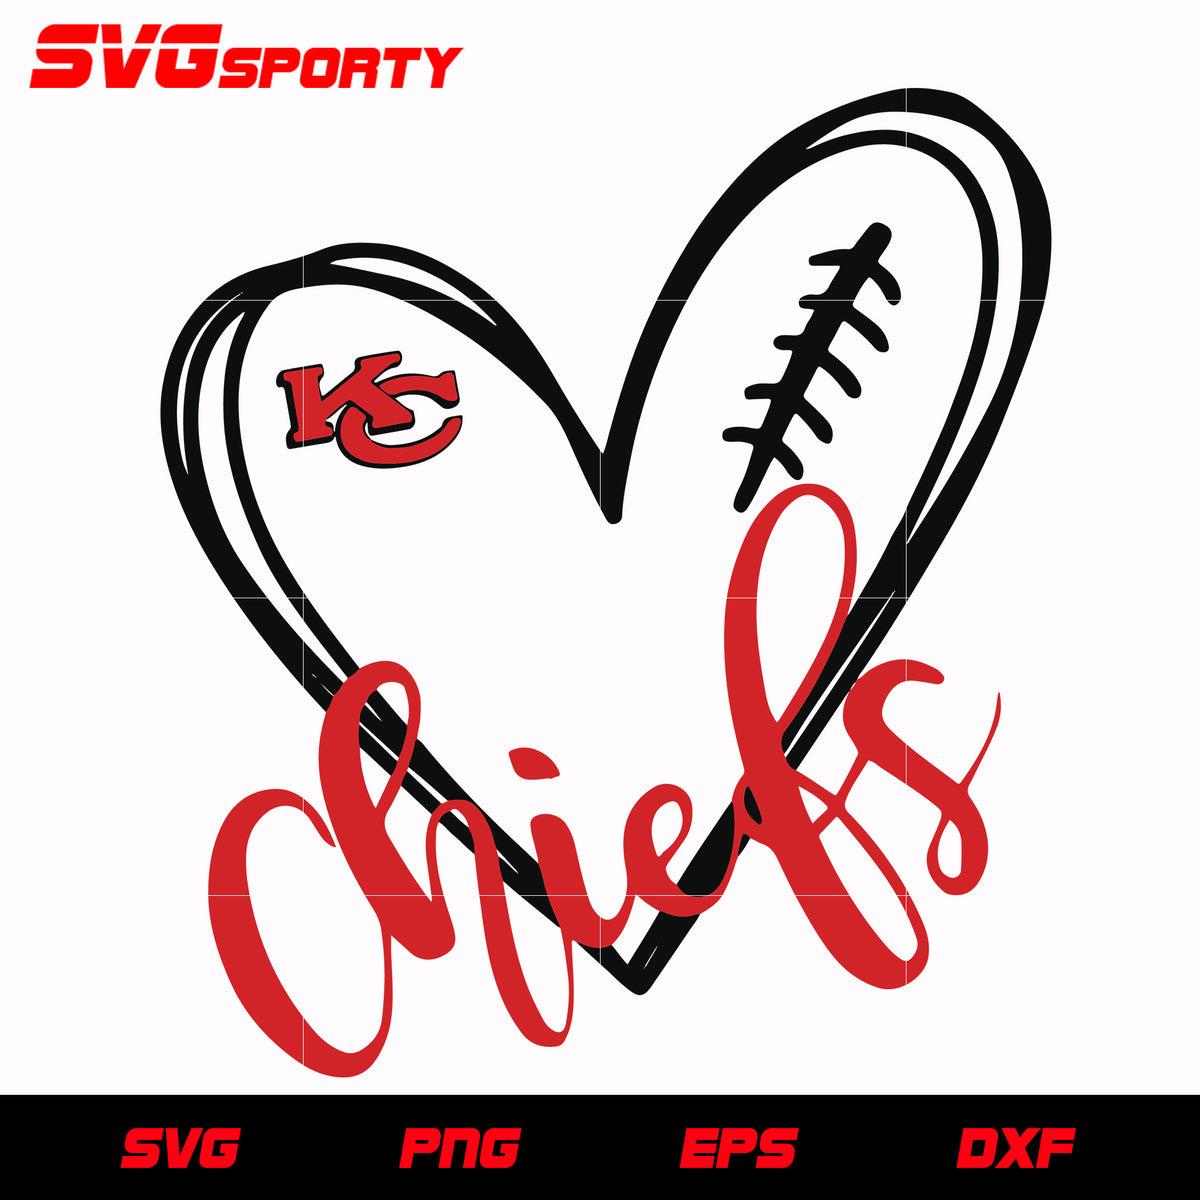 Chiefs SVG, DXF, PNG, EPS - Kansas City Chiefs SVG Cut Files